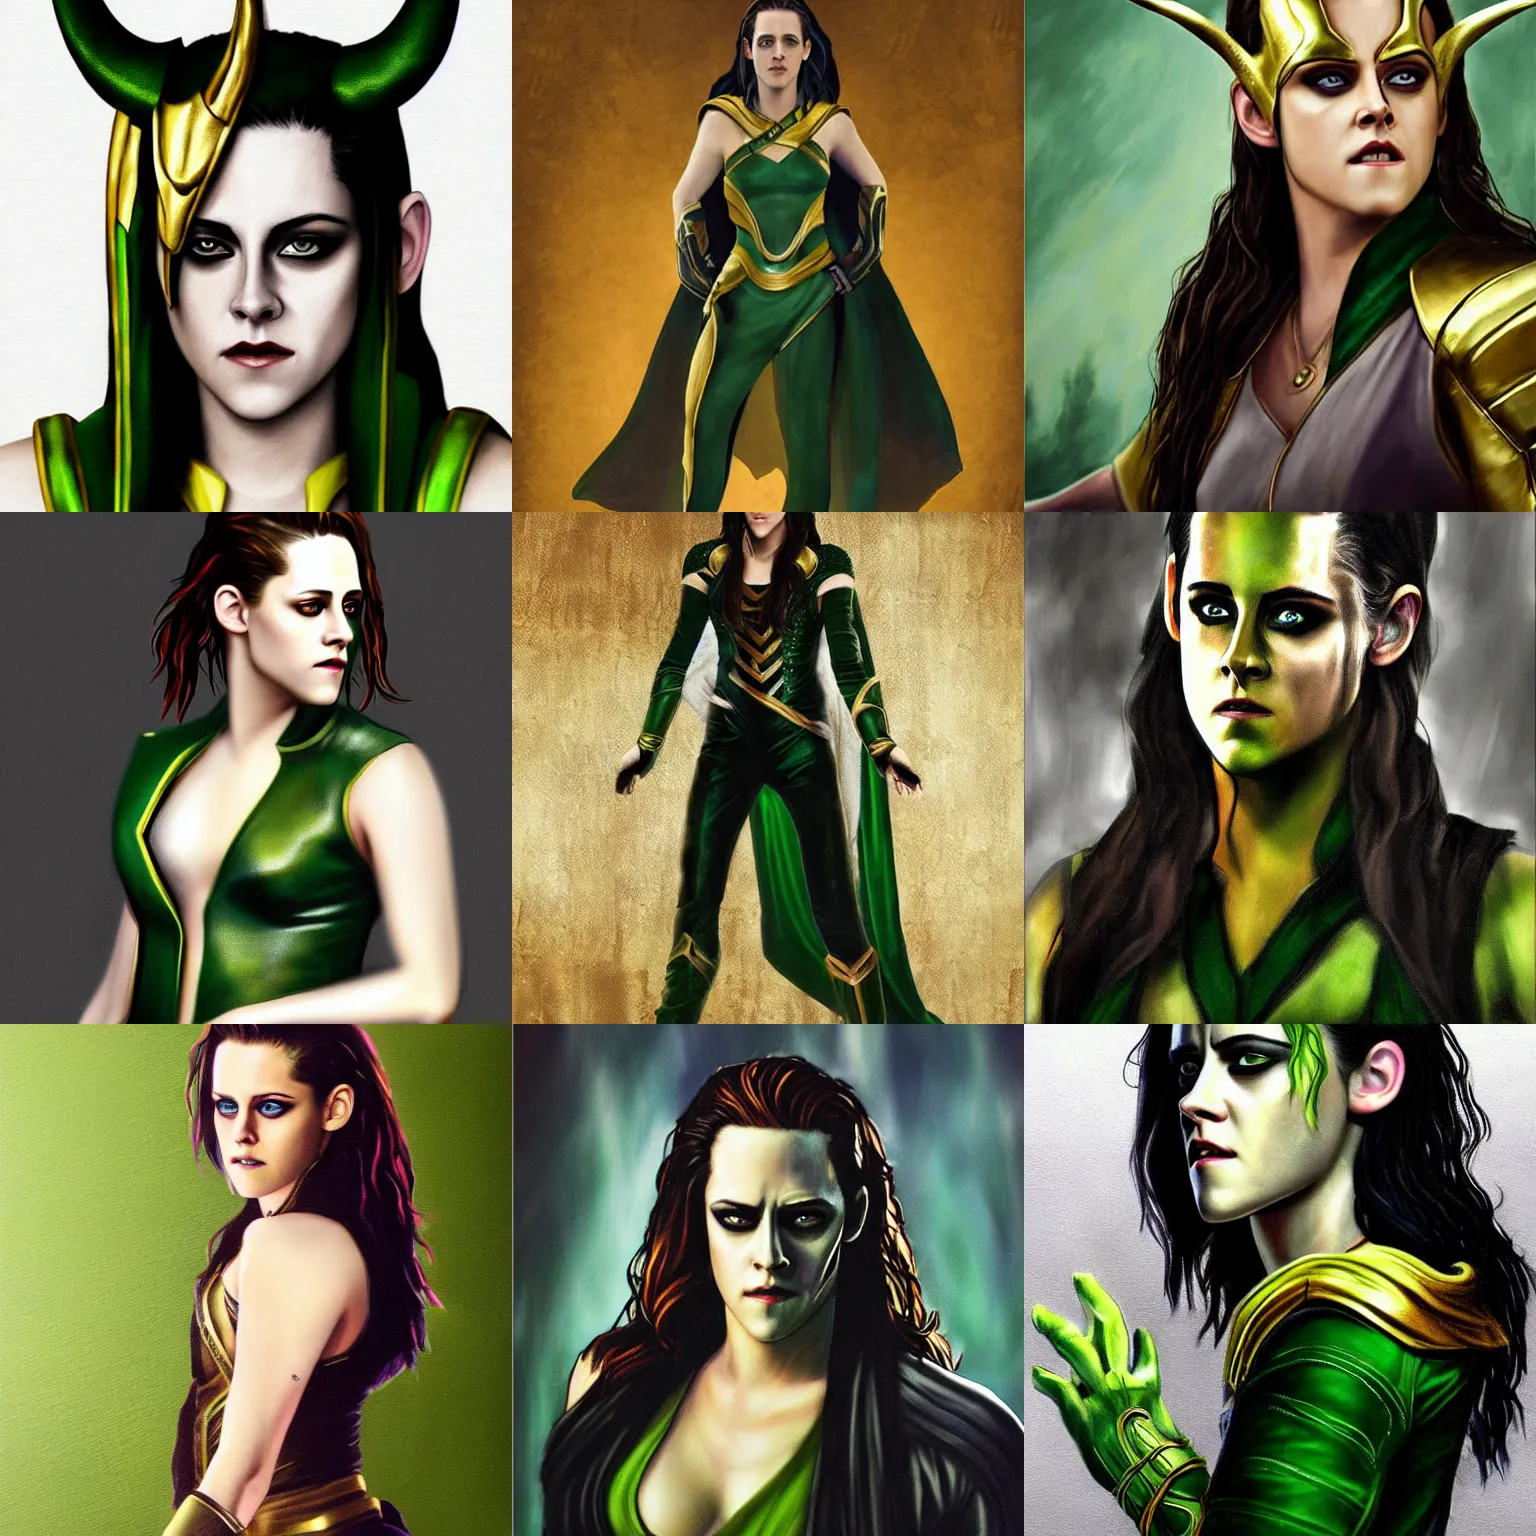 Prompt: Kristen Stewart dressed as Loki, photorealistic digital painting, full body and costume portrait